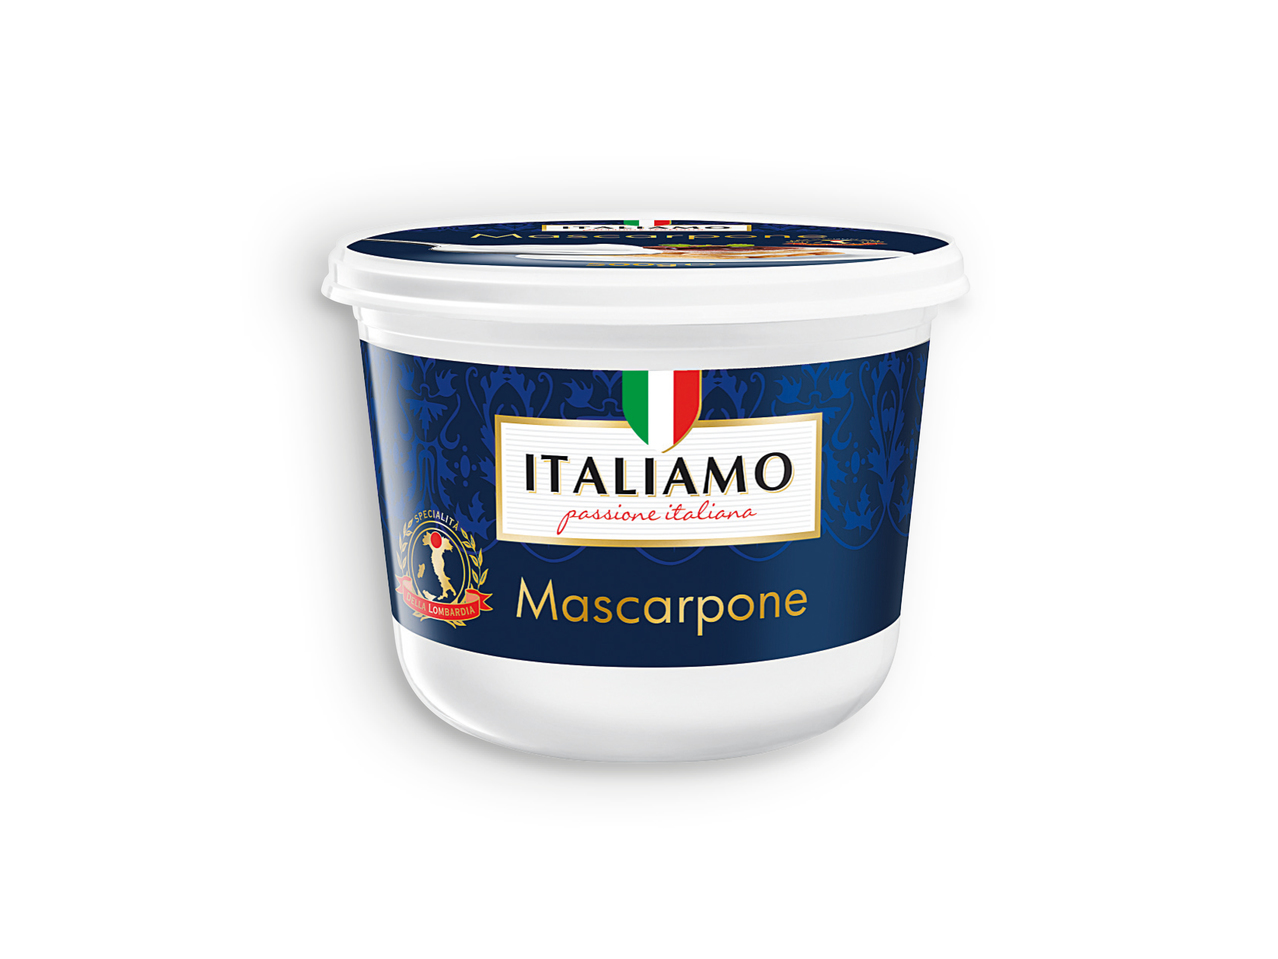 ITALIAMO(R) Mascarpone